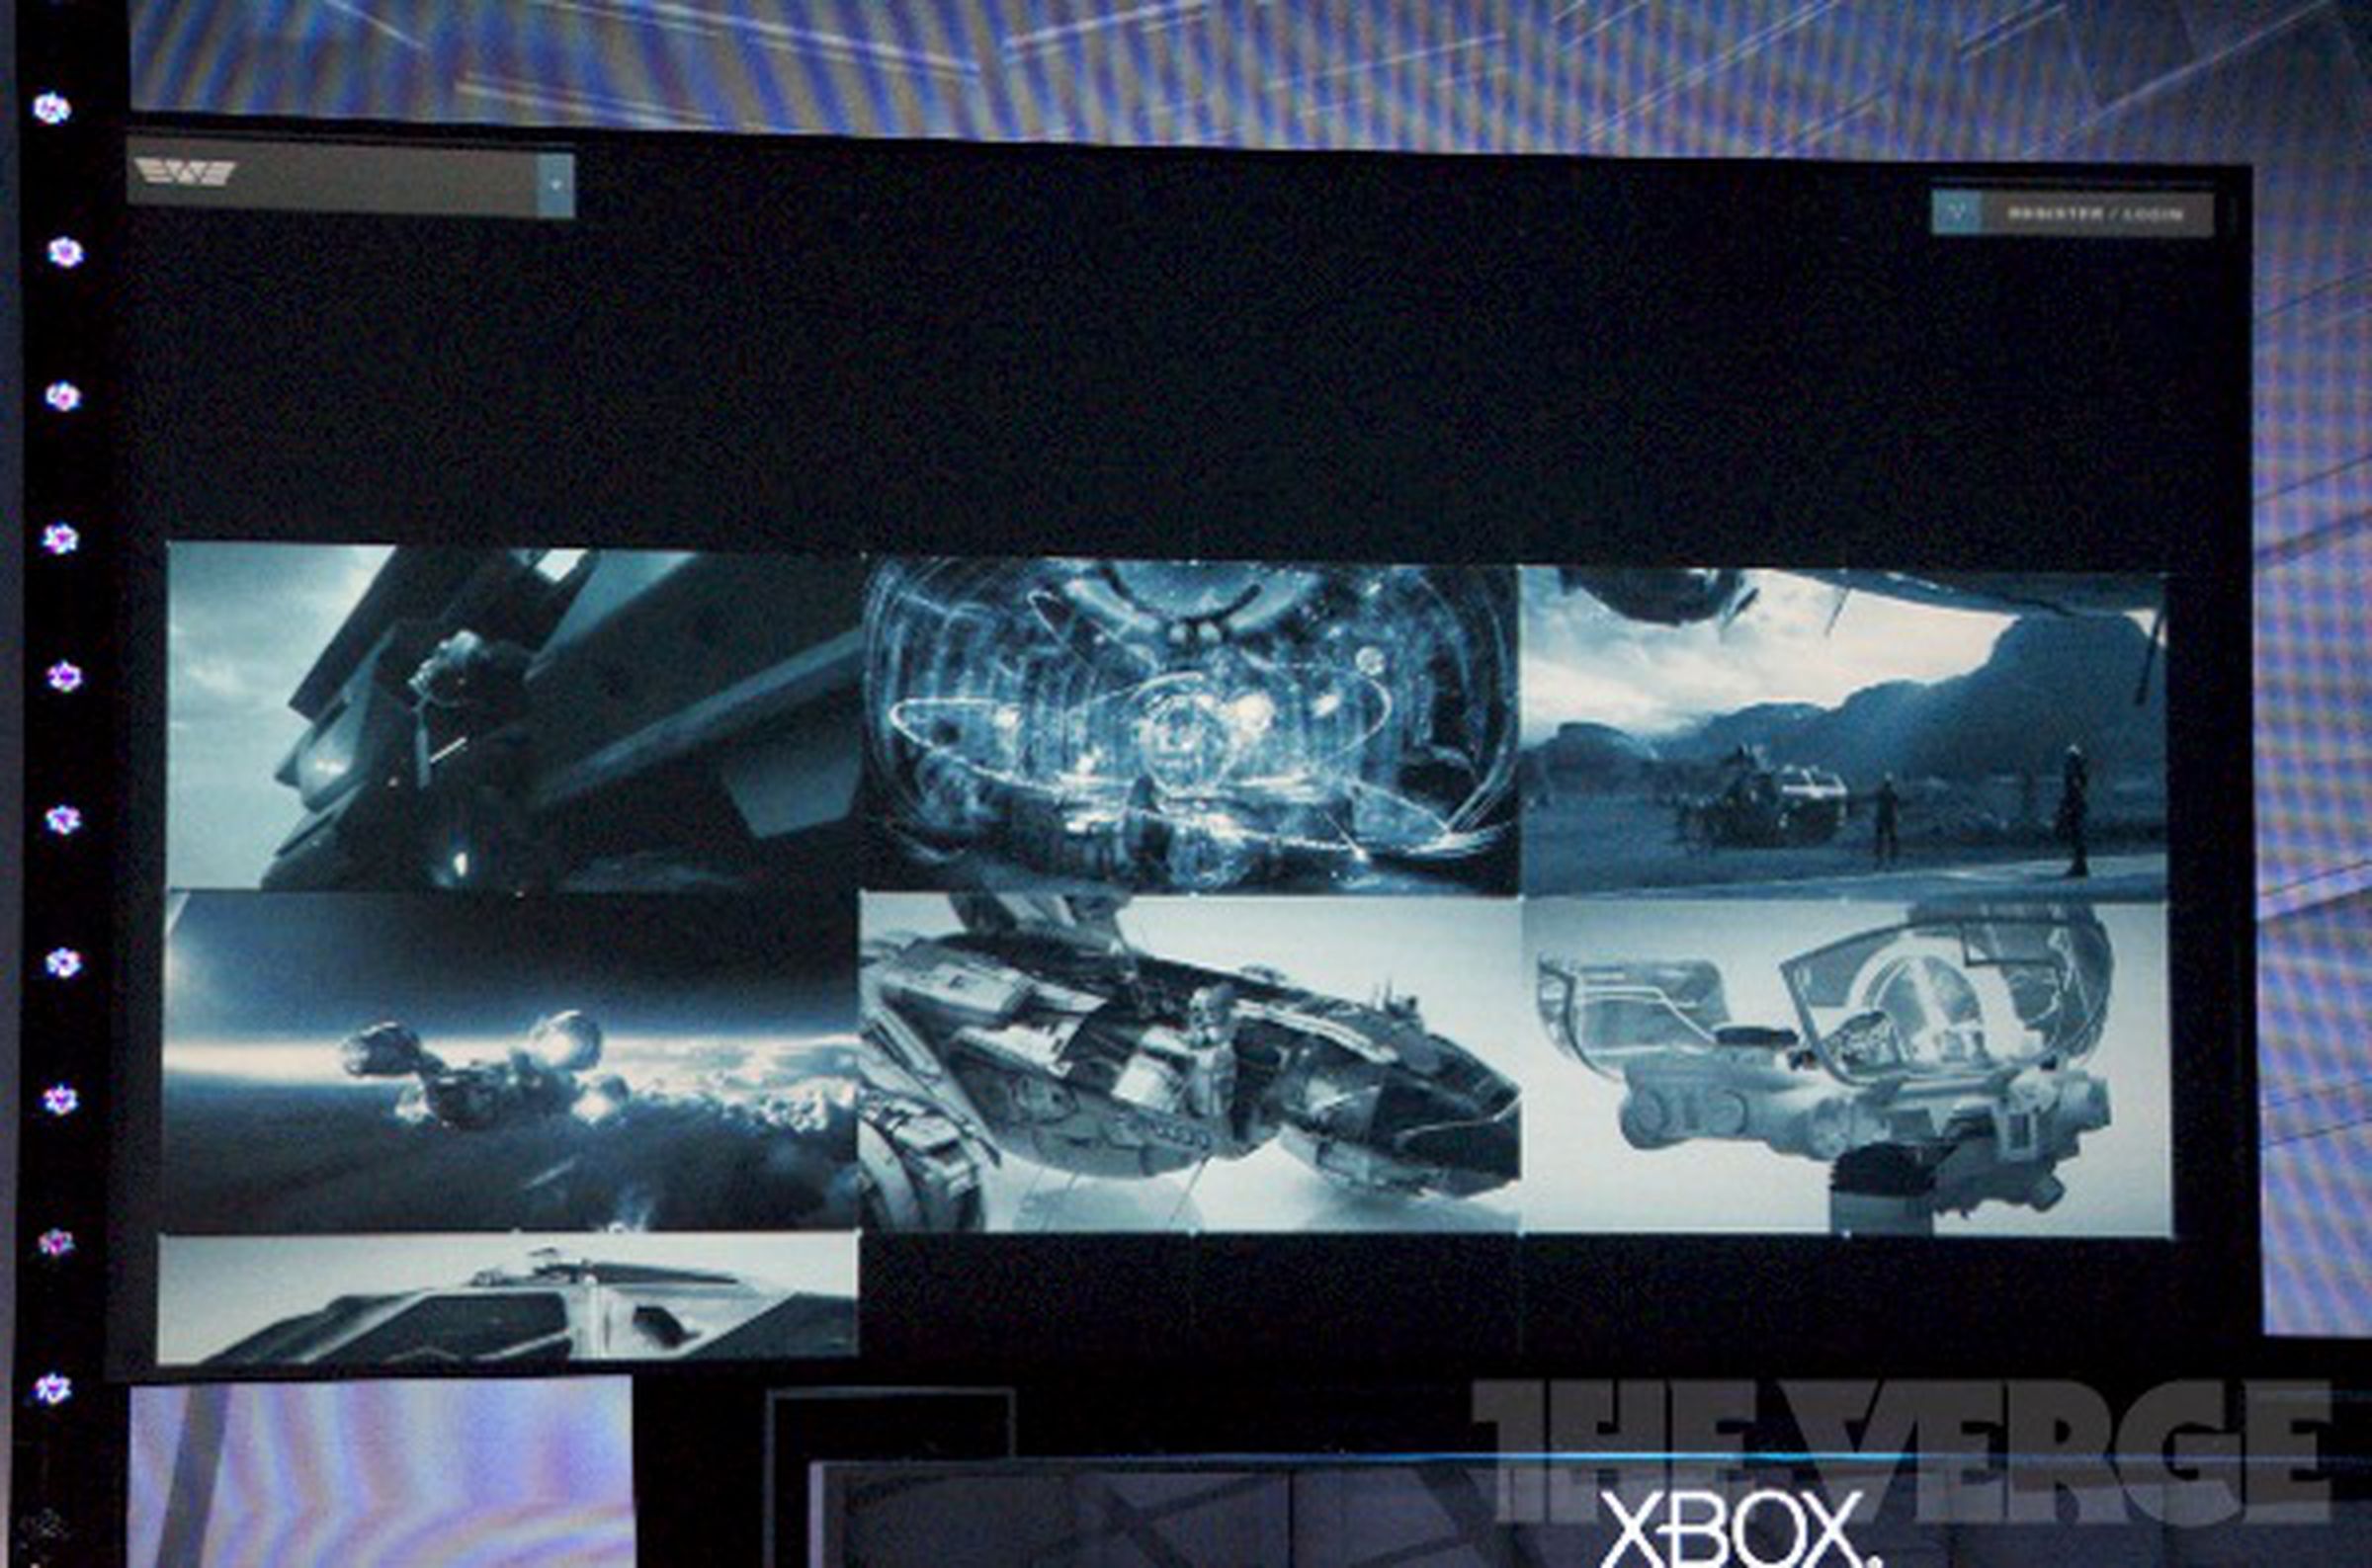 Internet Explorer for Xbox E3 2012 press conference photos